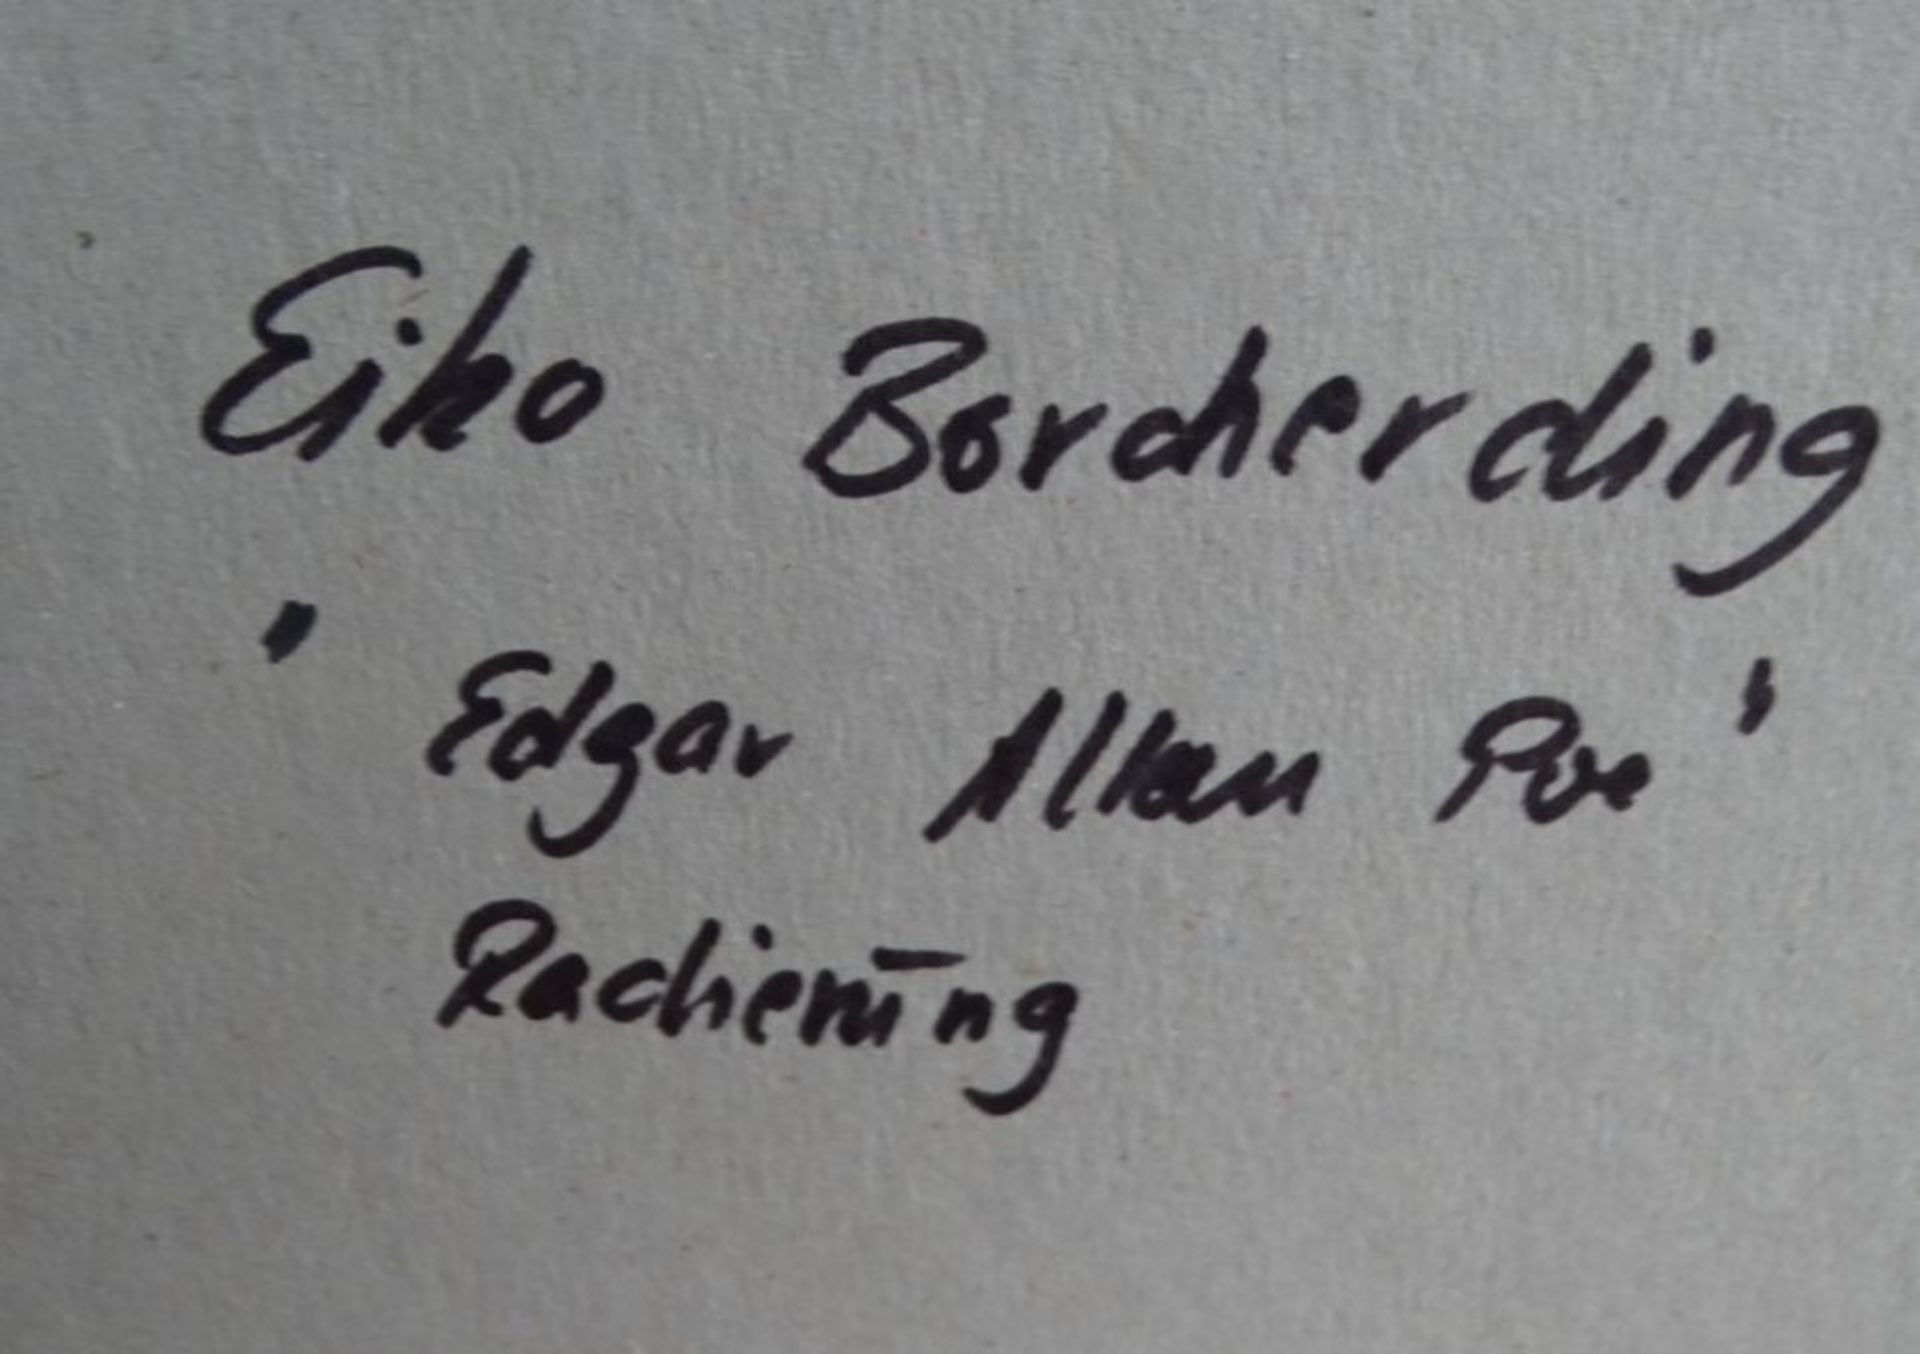 Eiko Borcherding , 2005 "Edgar Alan Poe" orig. Radierung, ger/Glas, RG 58x48 cm - Image 7 of 7